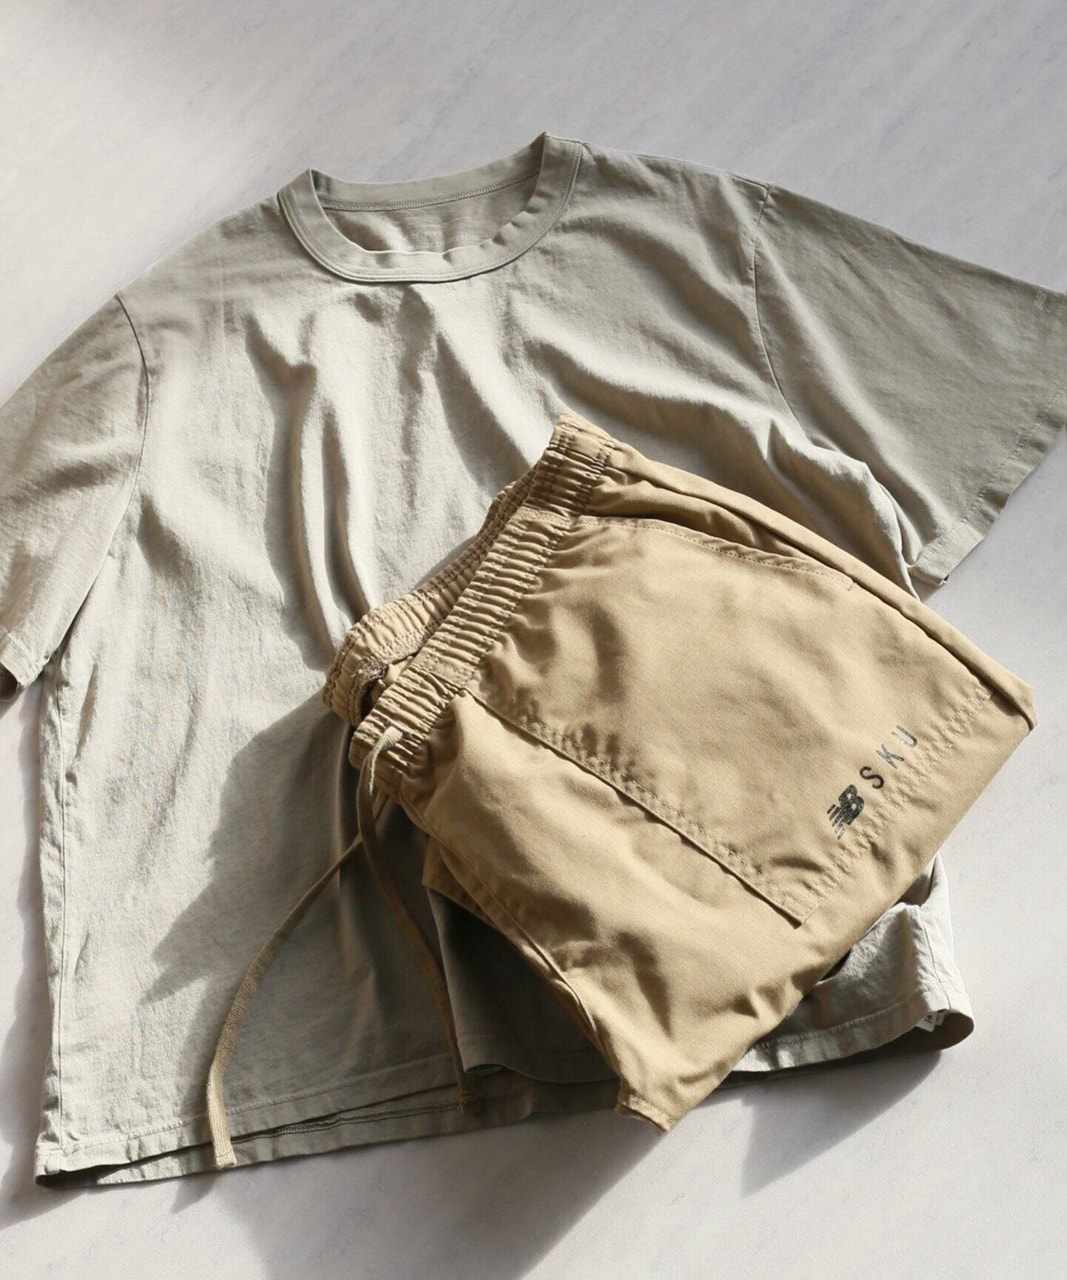 New Balance Japan x Save Khaki United Collaboration apparel garments journal standard baycrews exclusive sneakers shirts parka jacket tote bag sku america